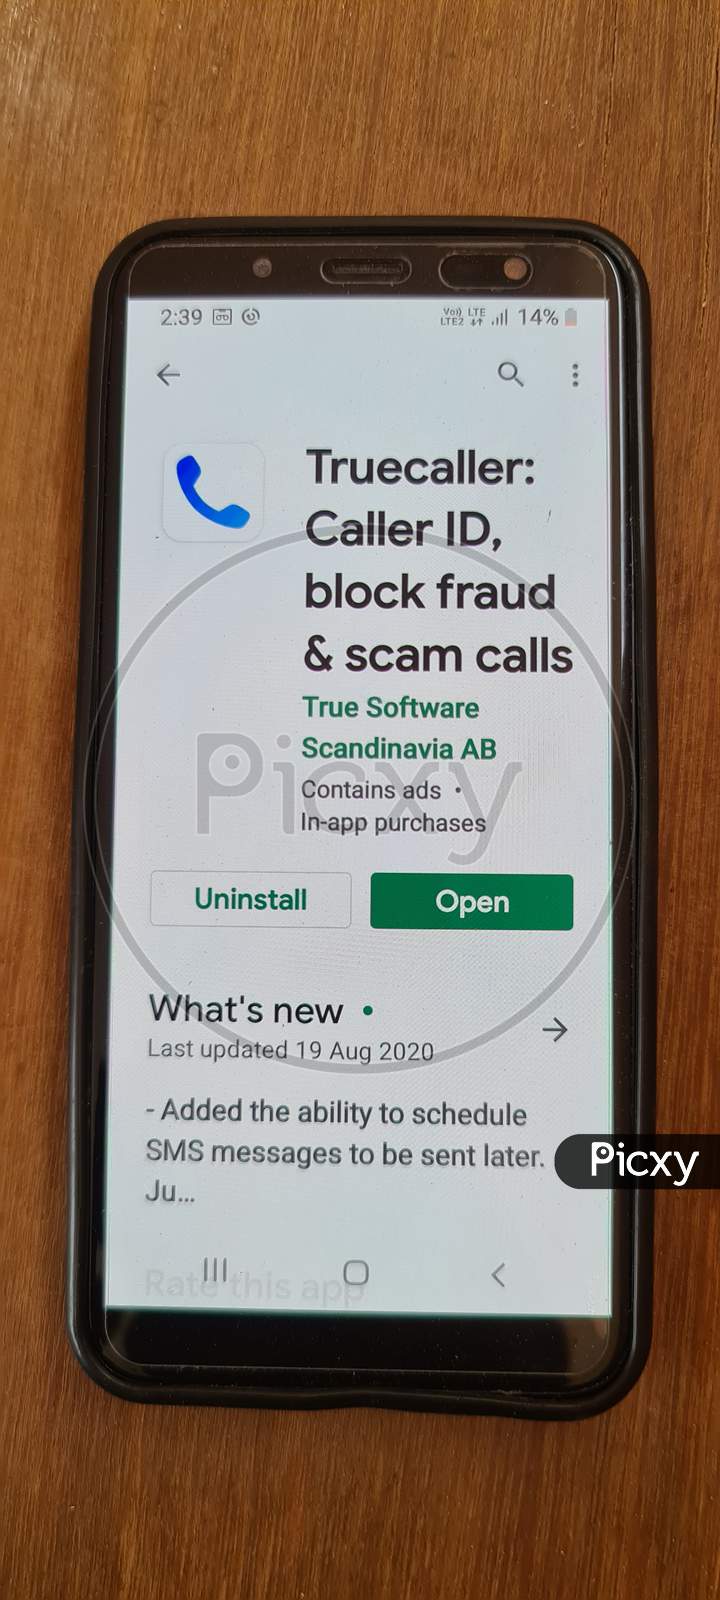 Truecaller application on smartphone screen